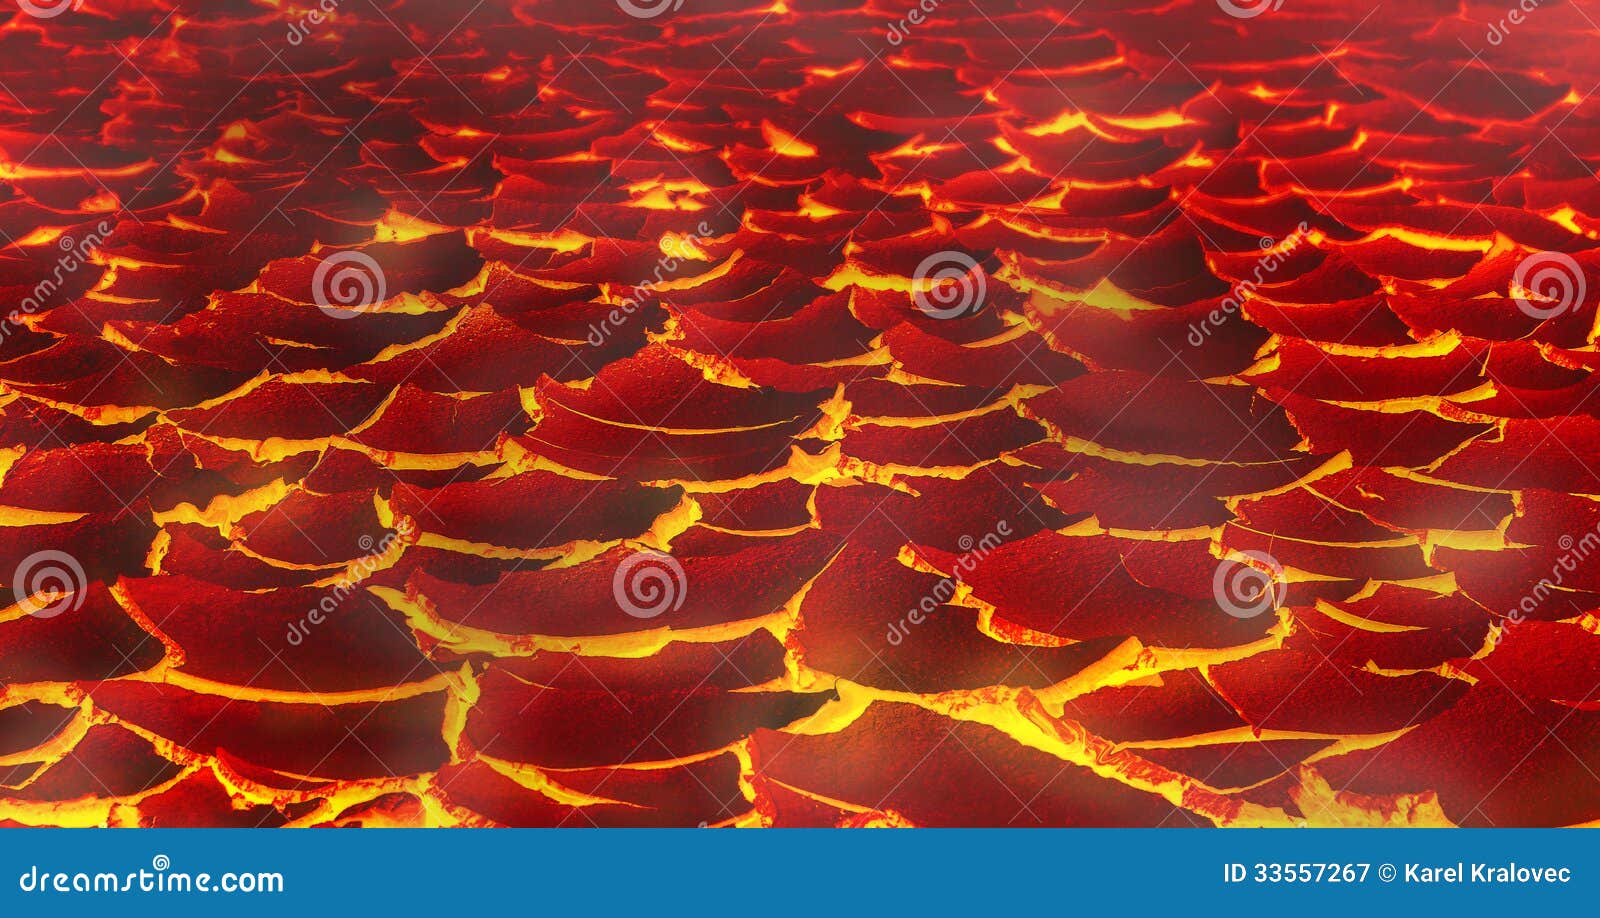 molten-earth-lava-cracked-ground-hot-33557267.jpg